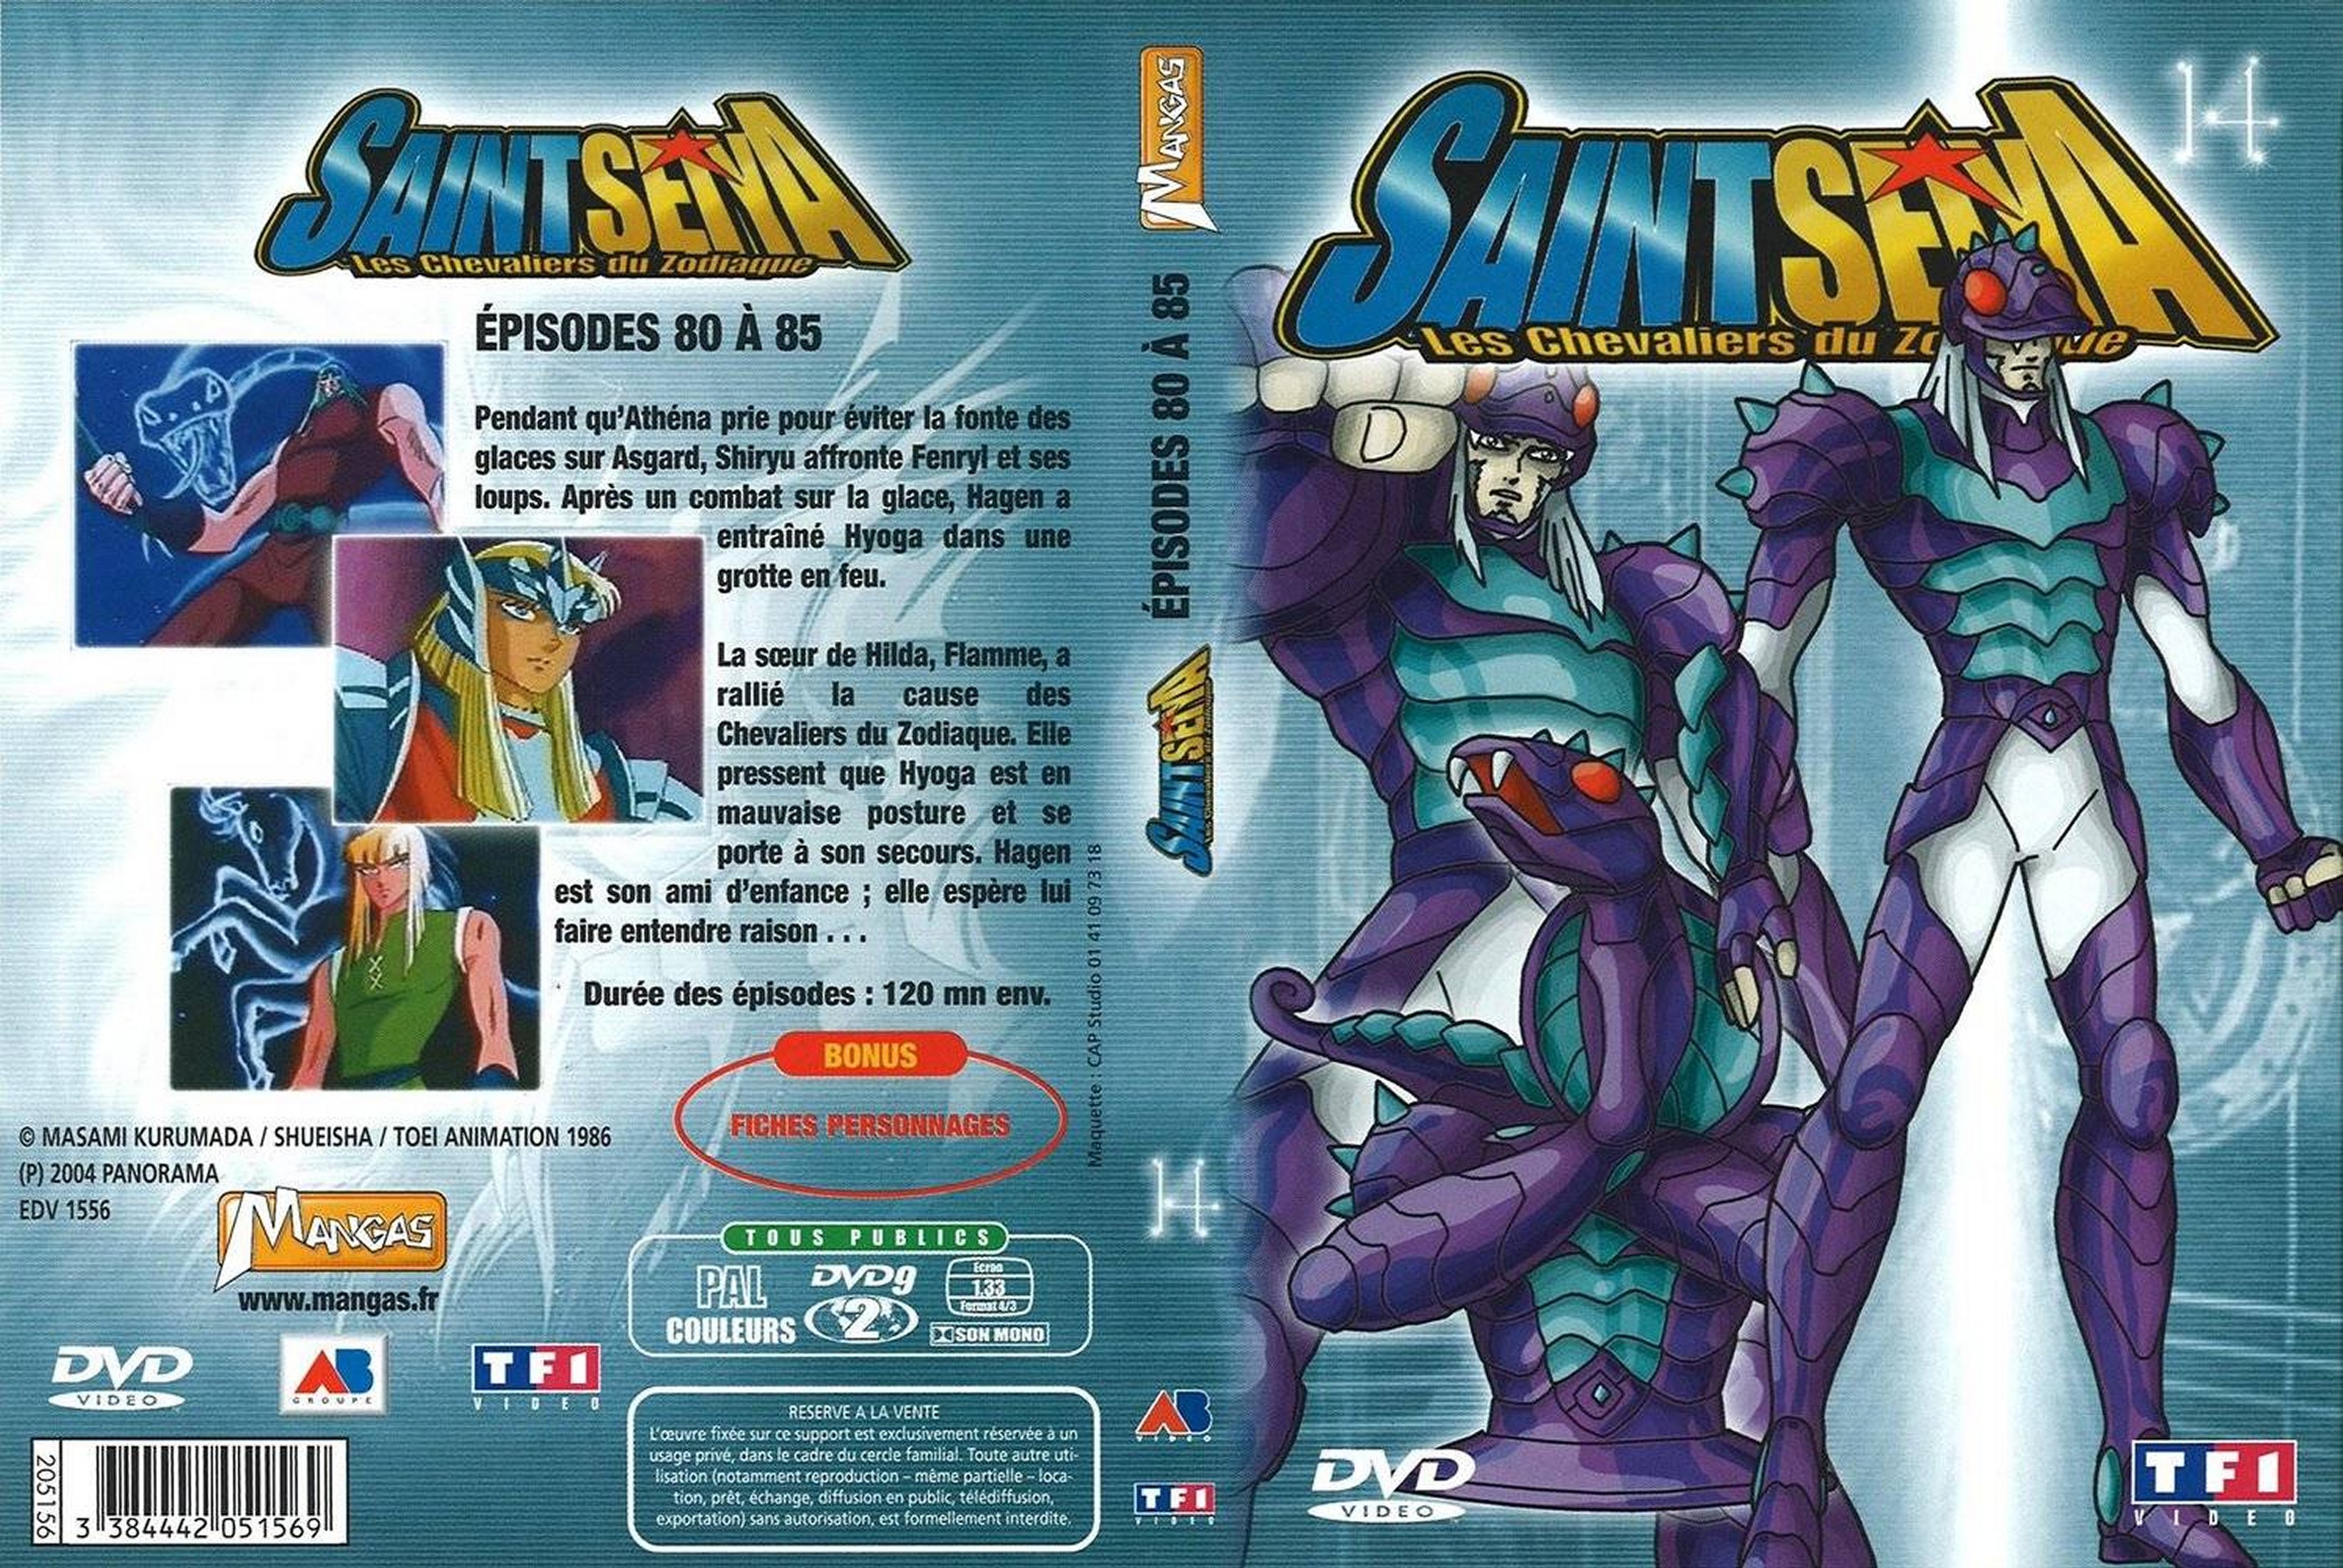 Jaquette DVD Saint Seiya vol 14